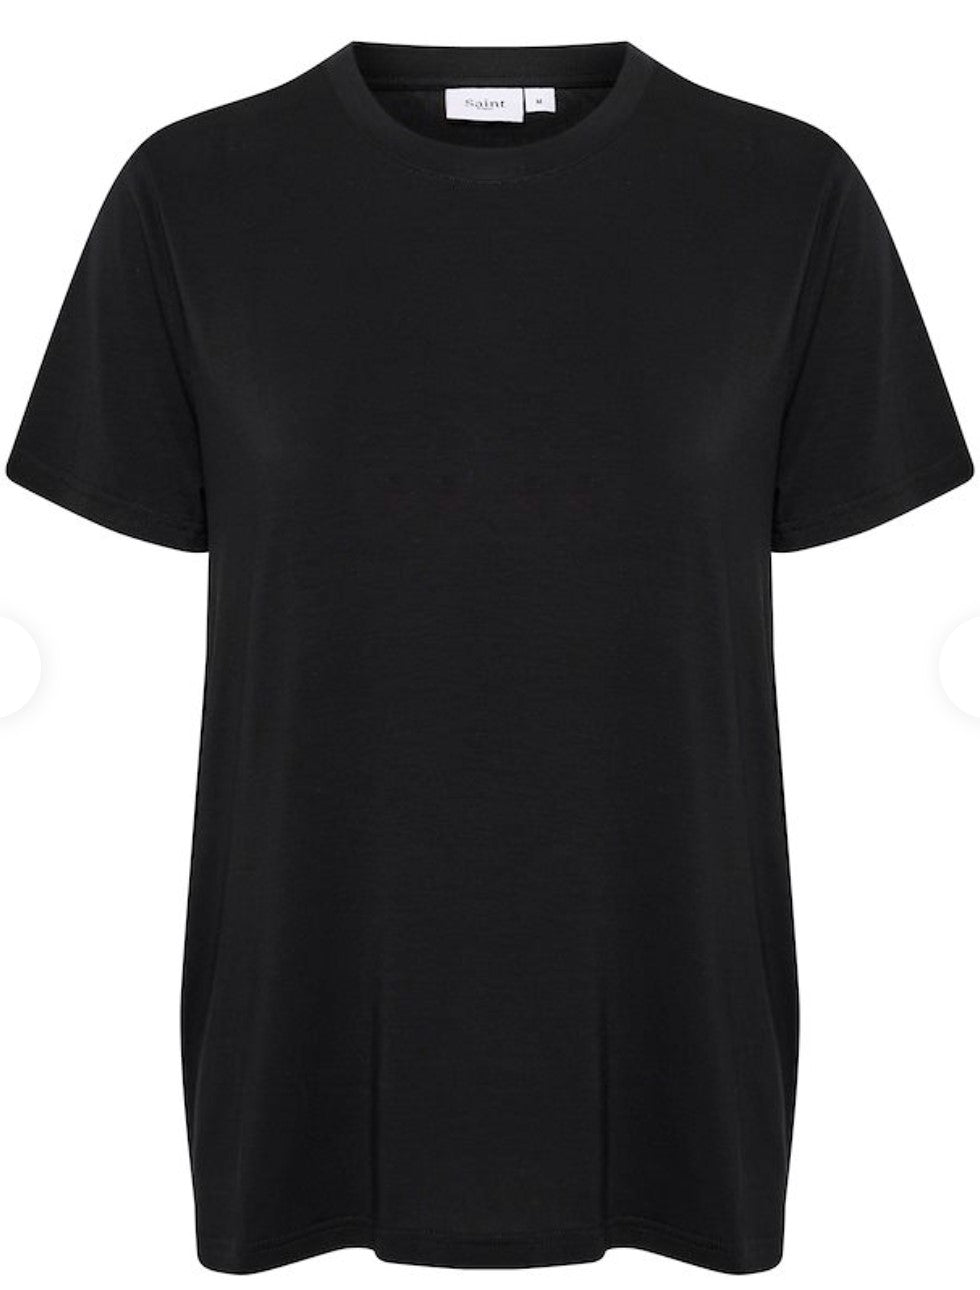 Adelia SZ Regular T-shirt - Black